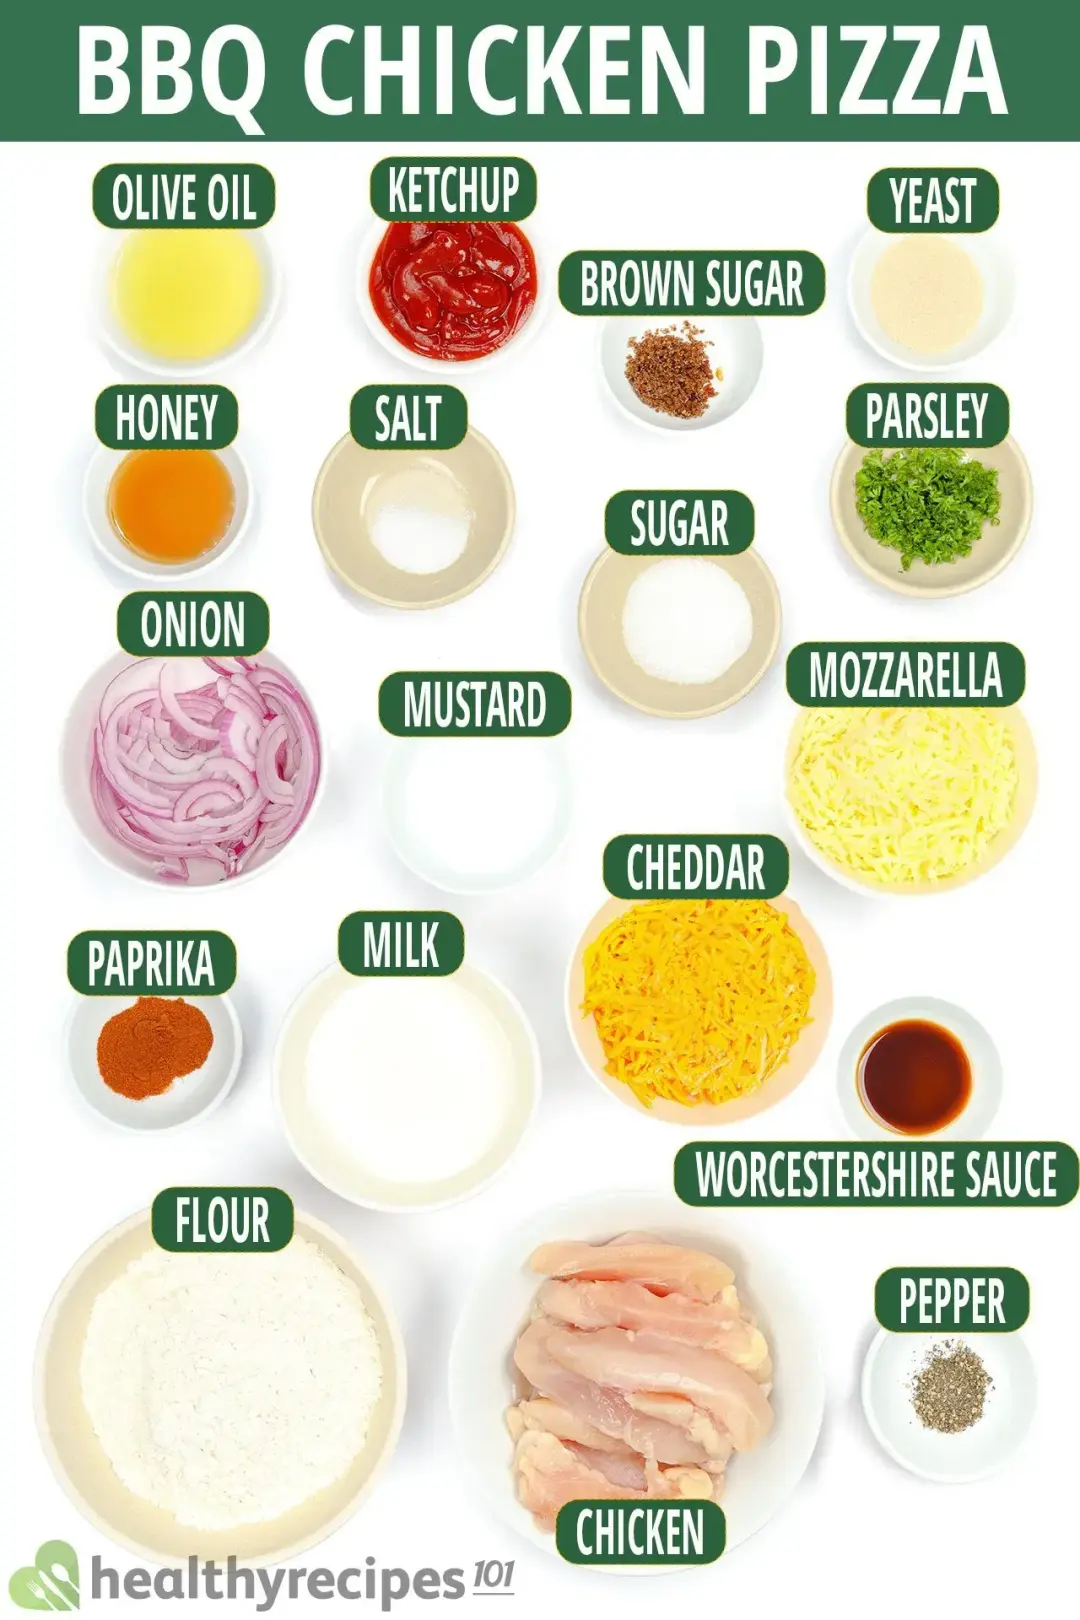 Ingredients for BBQ Chicken Pizza